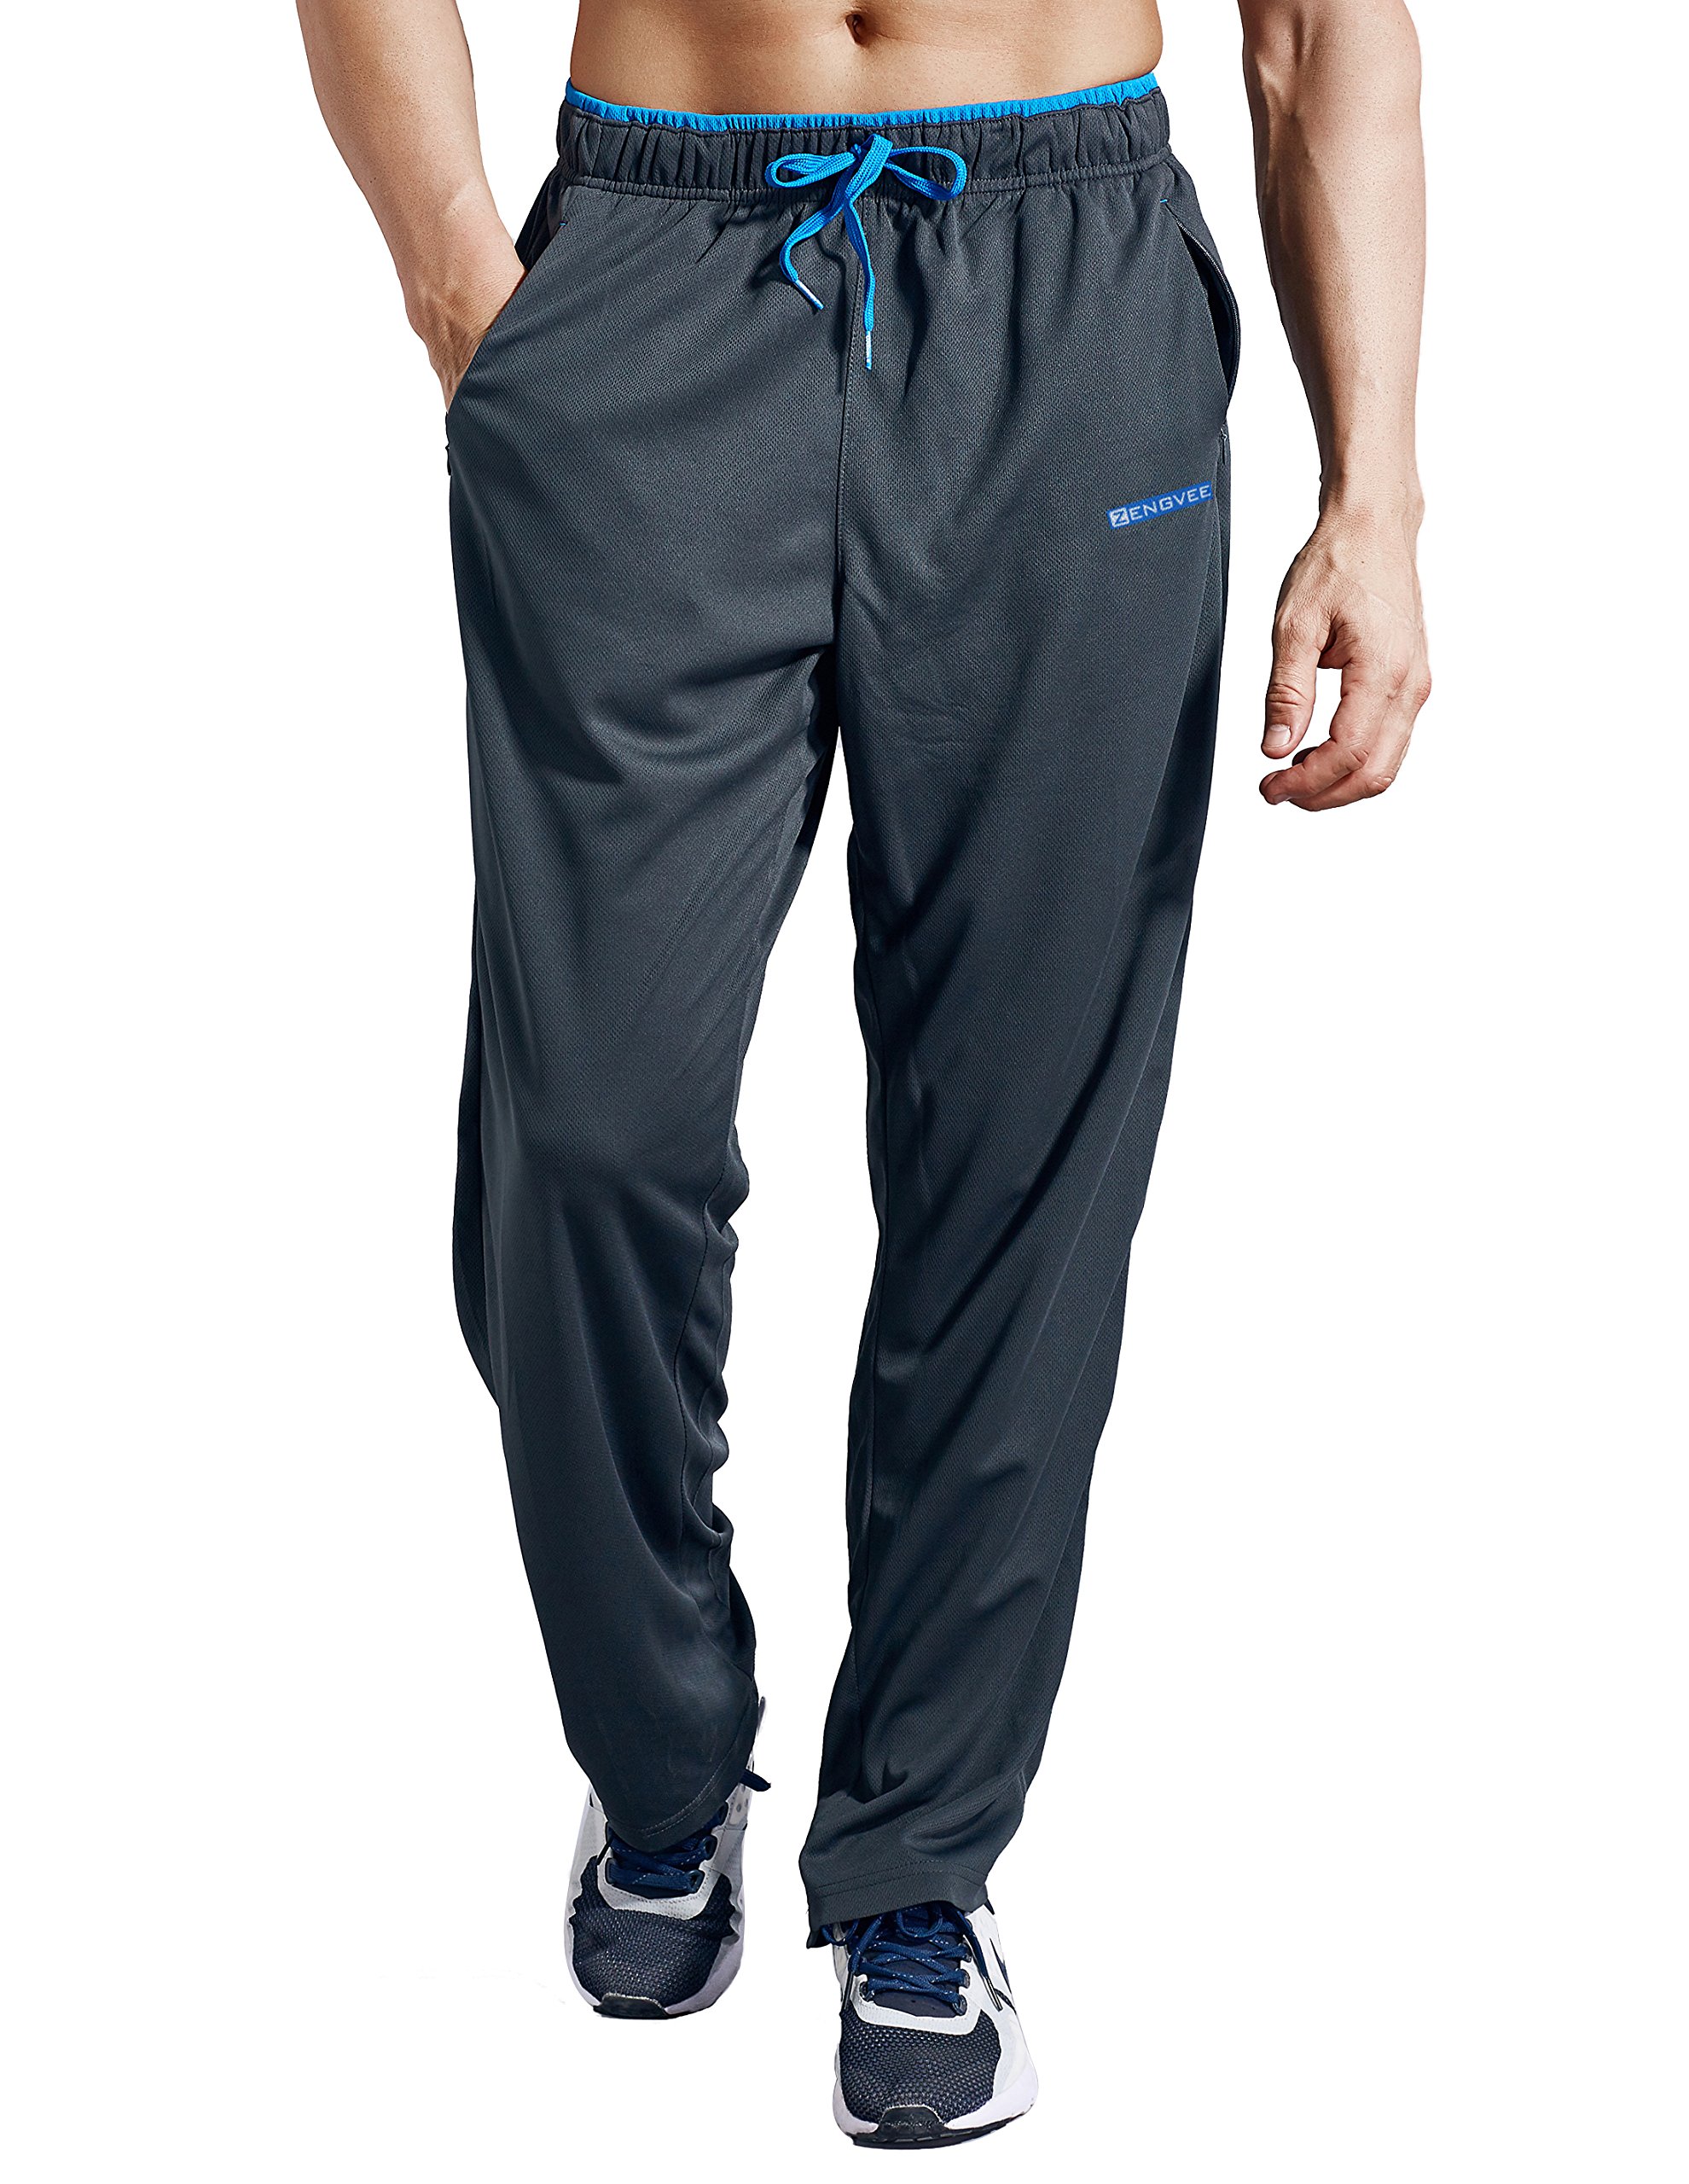 ZENGVEE Men's Sweatpants with Zipper Pockets Open Bottom Athletic Pants for Jogging, Workout, Gym, Running, Training